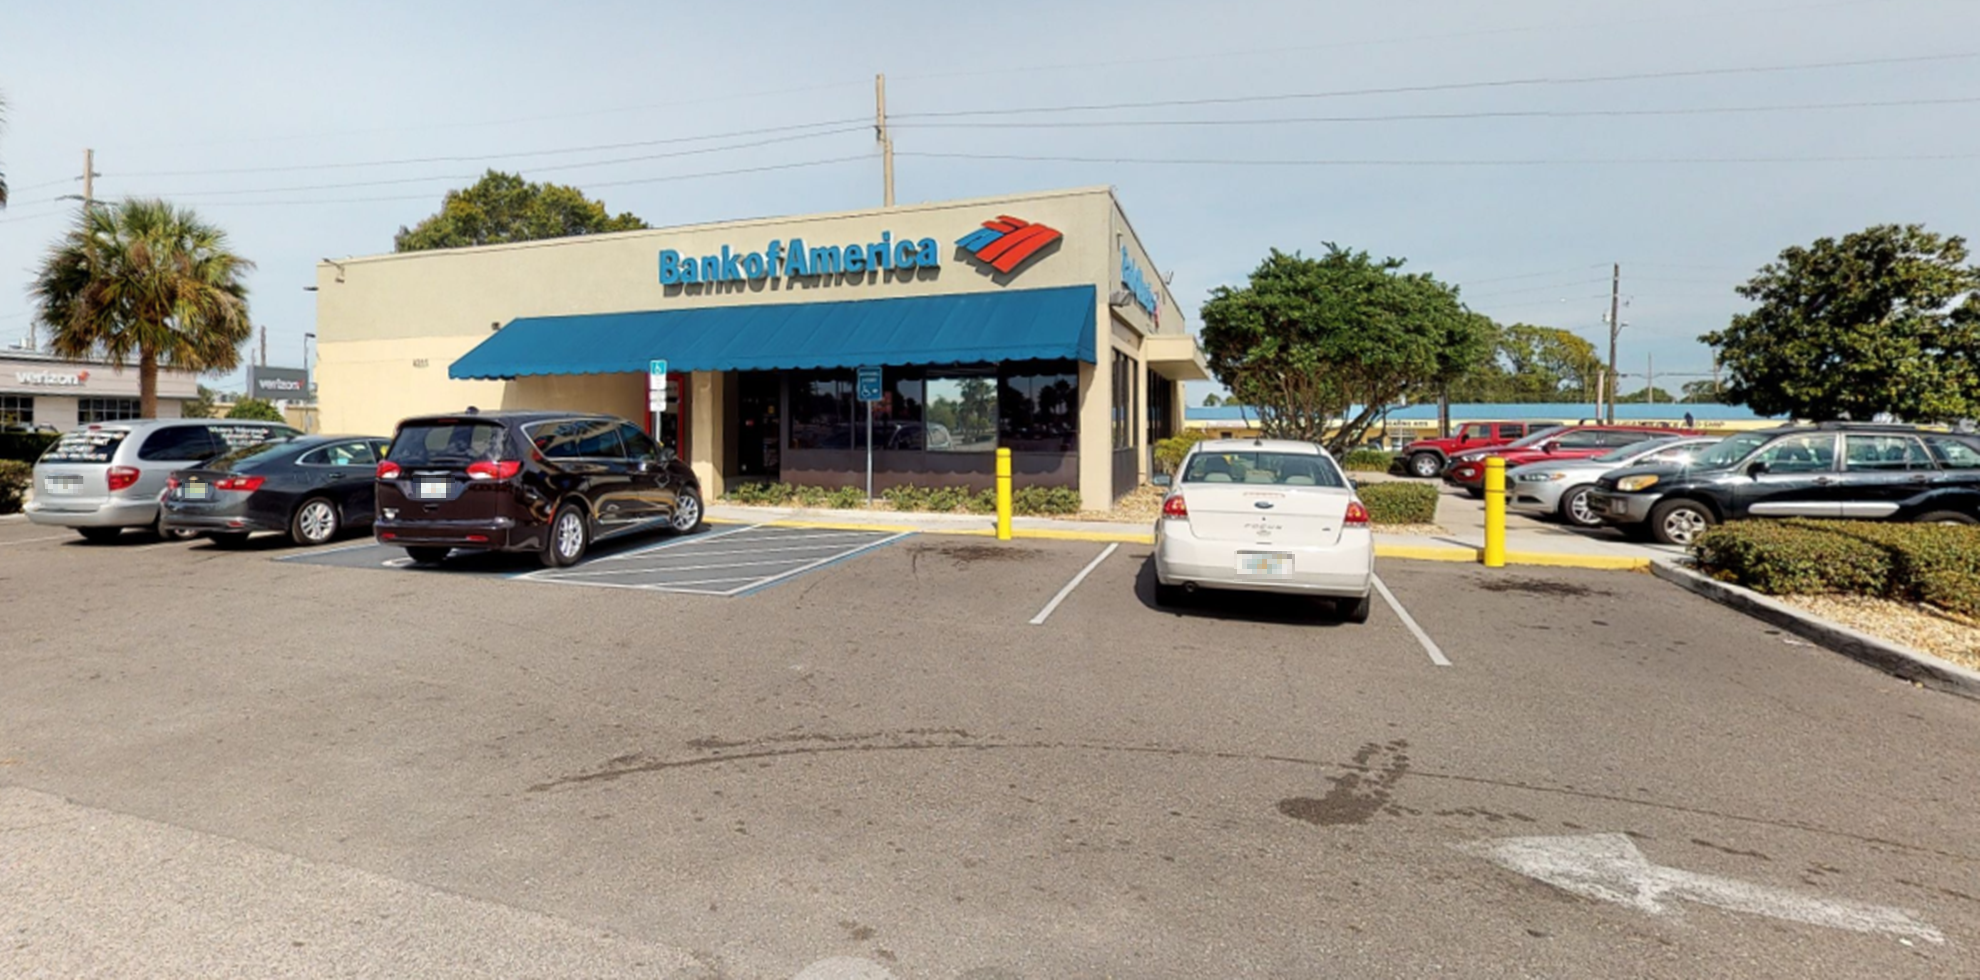 Bank of America financial center with drive-thru ATM and teller | 4215 Sebring Pkwy, Sebring, FL 33870